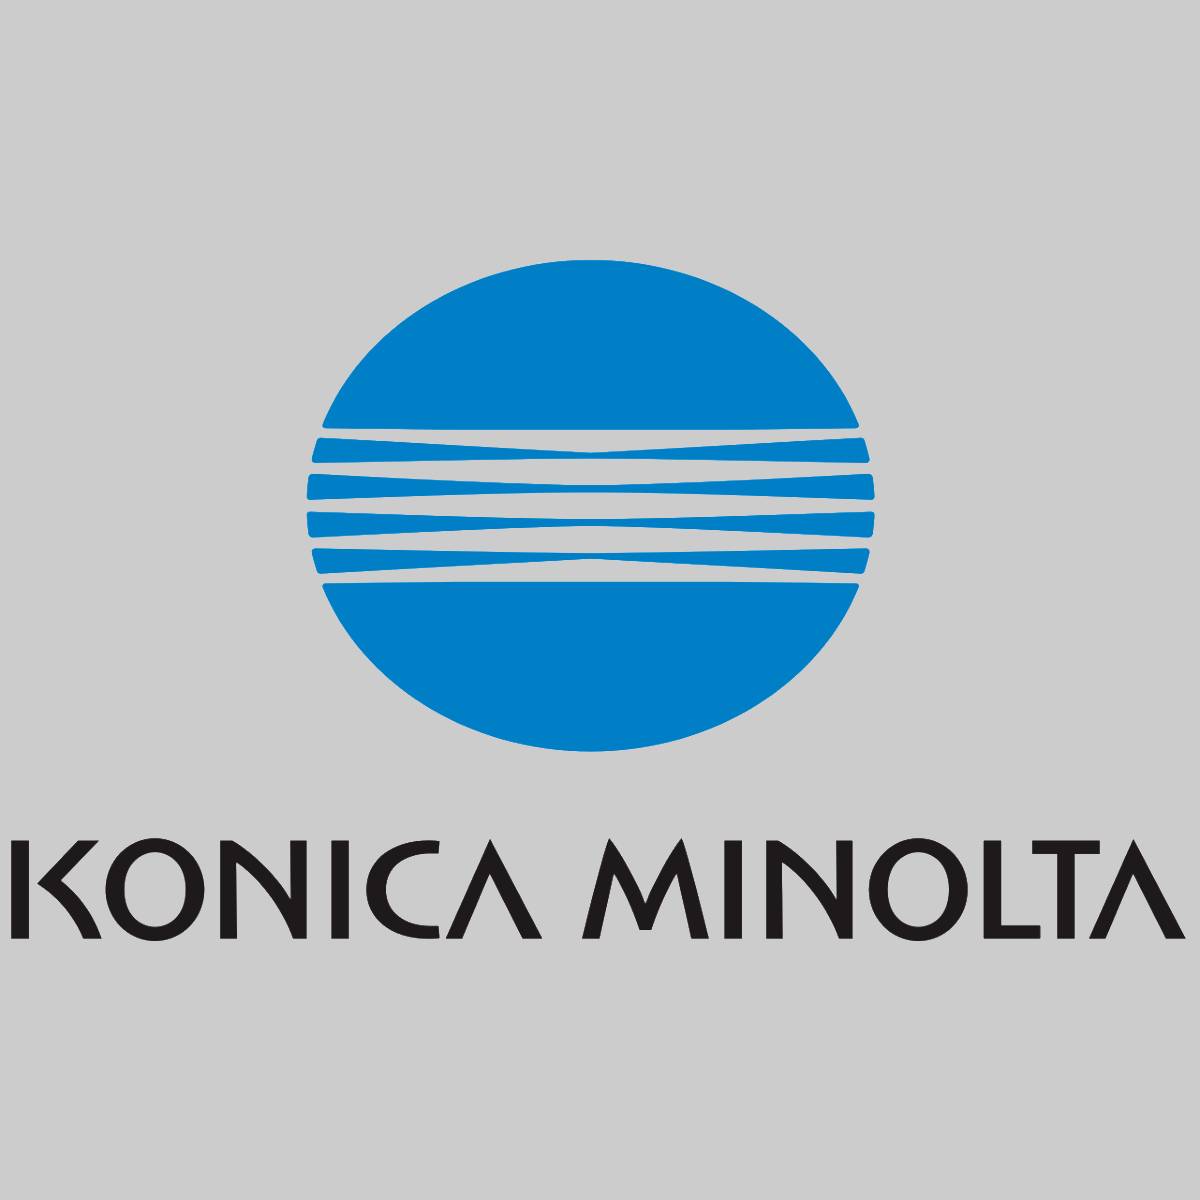 Original Konica Minolta TN515 A9E8050 Toner Black for Bizhub 458 558 NEW OVP^